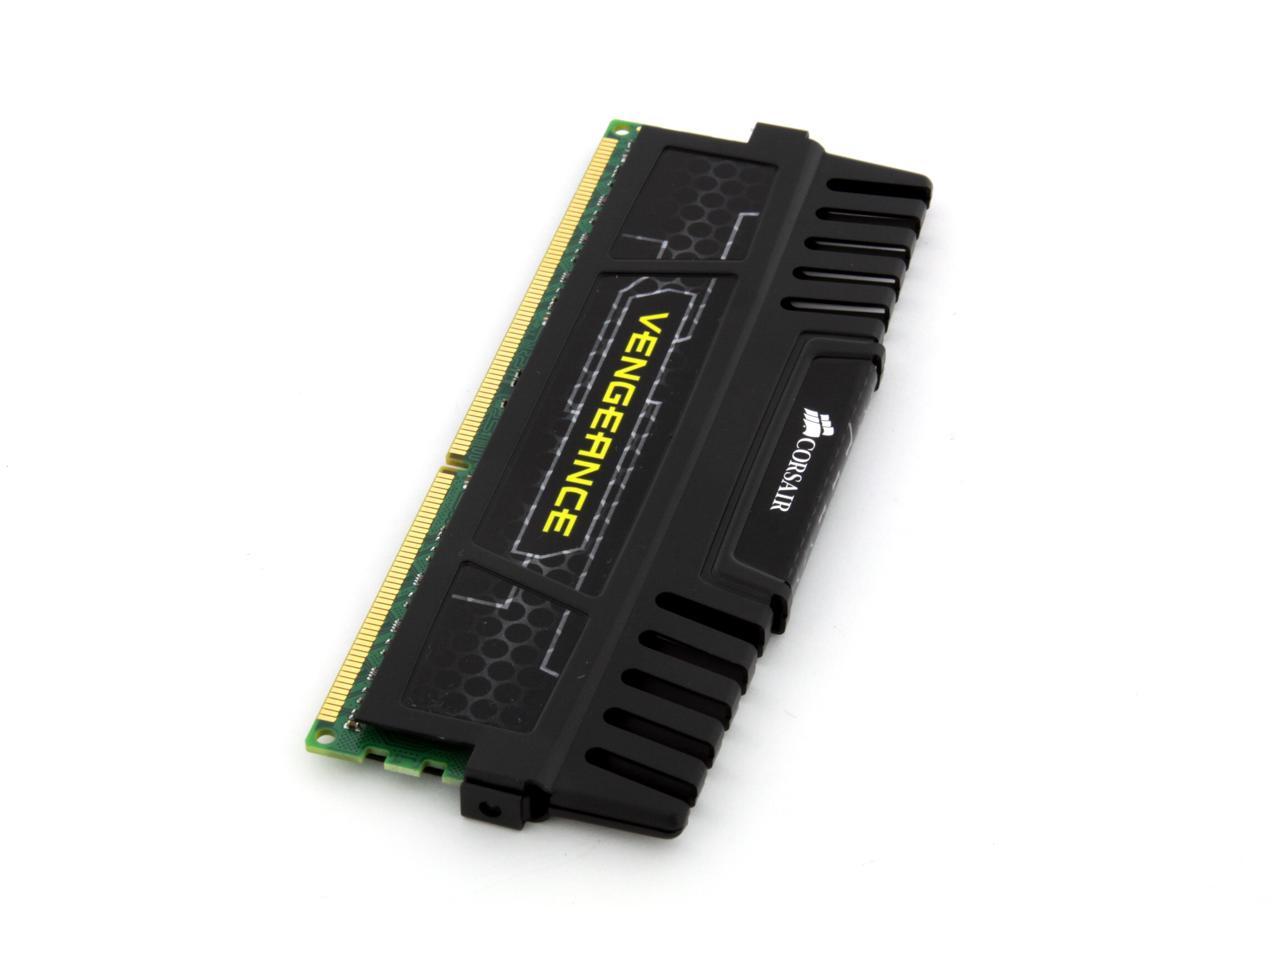 CORSAIR Vengeance 8GB (2 x 4GB) 240-Pin DDR3 SDRAM DDR3 1866 (PC3 